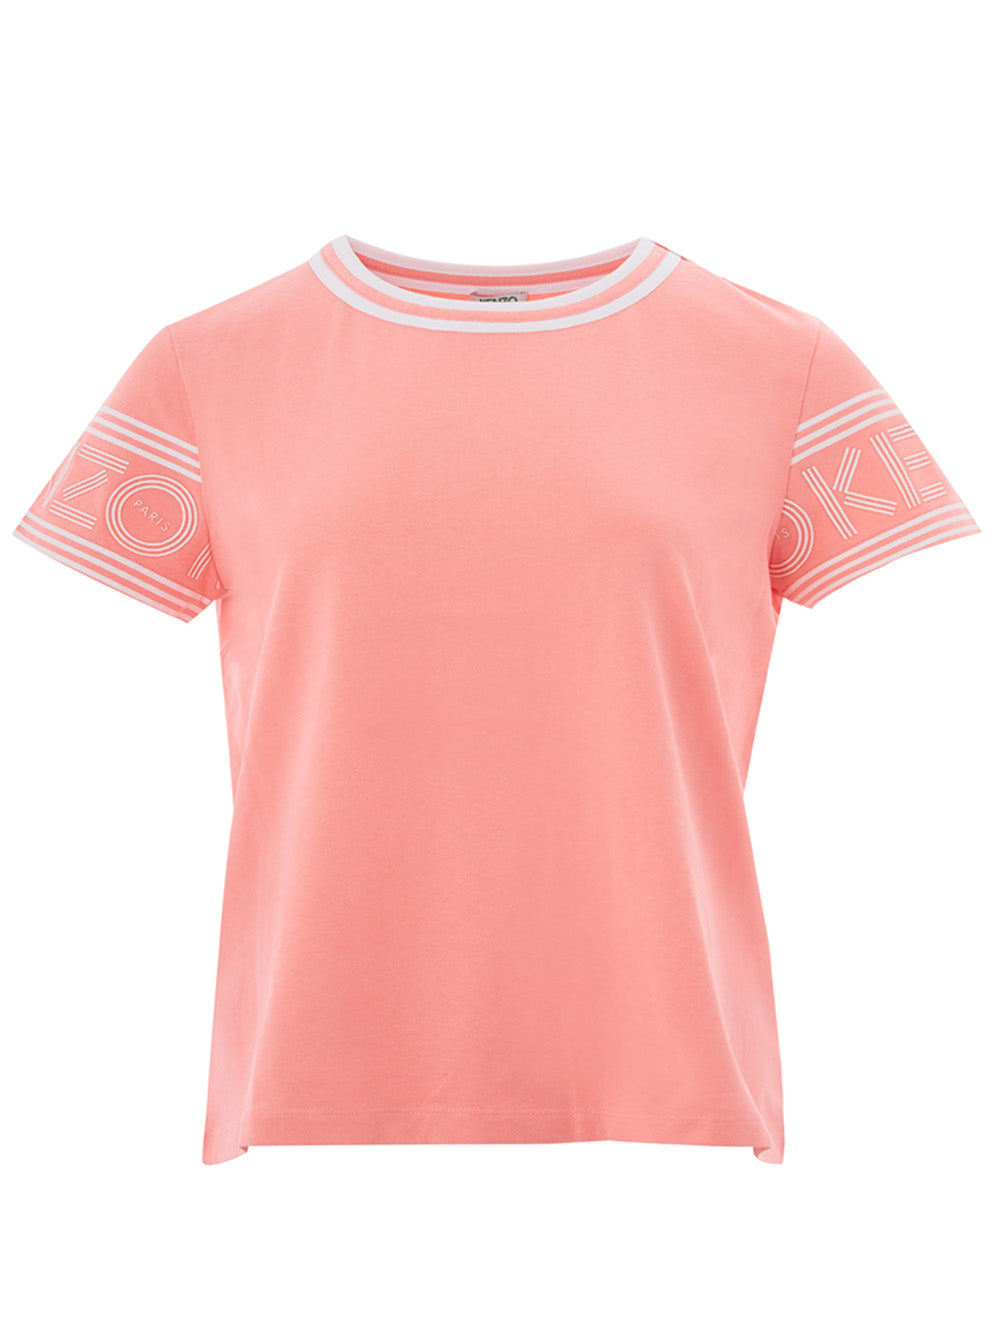 Kenzo Pink Cotton T-Shirt